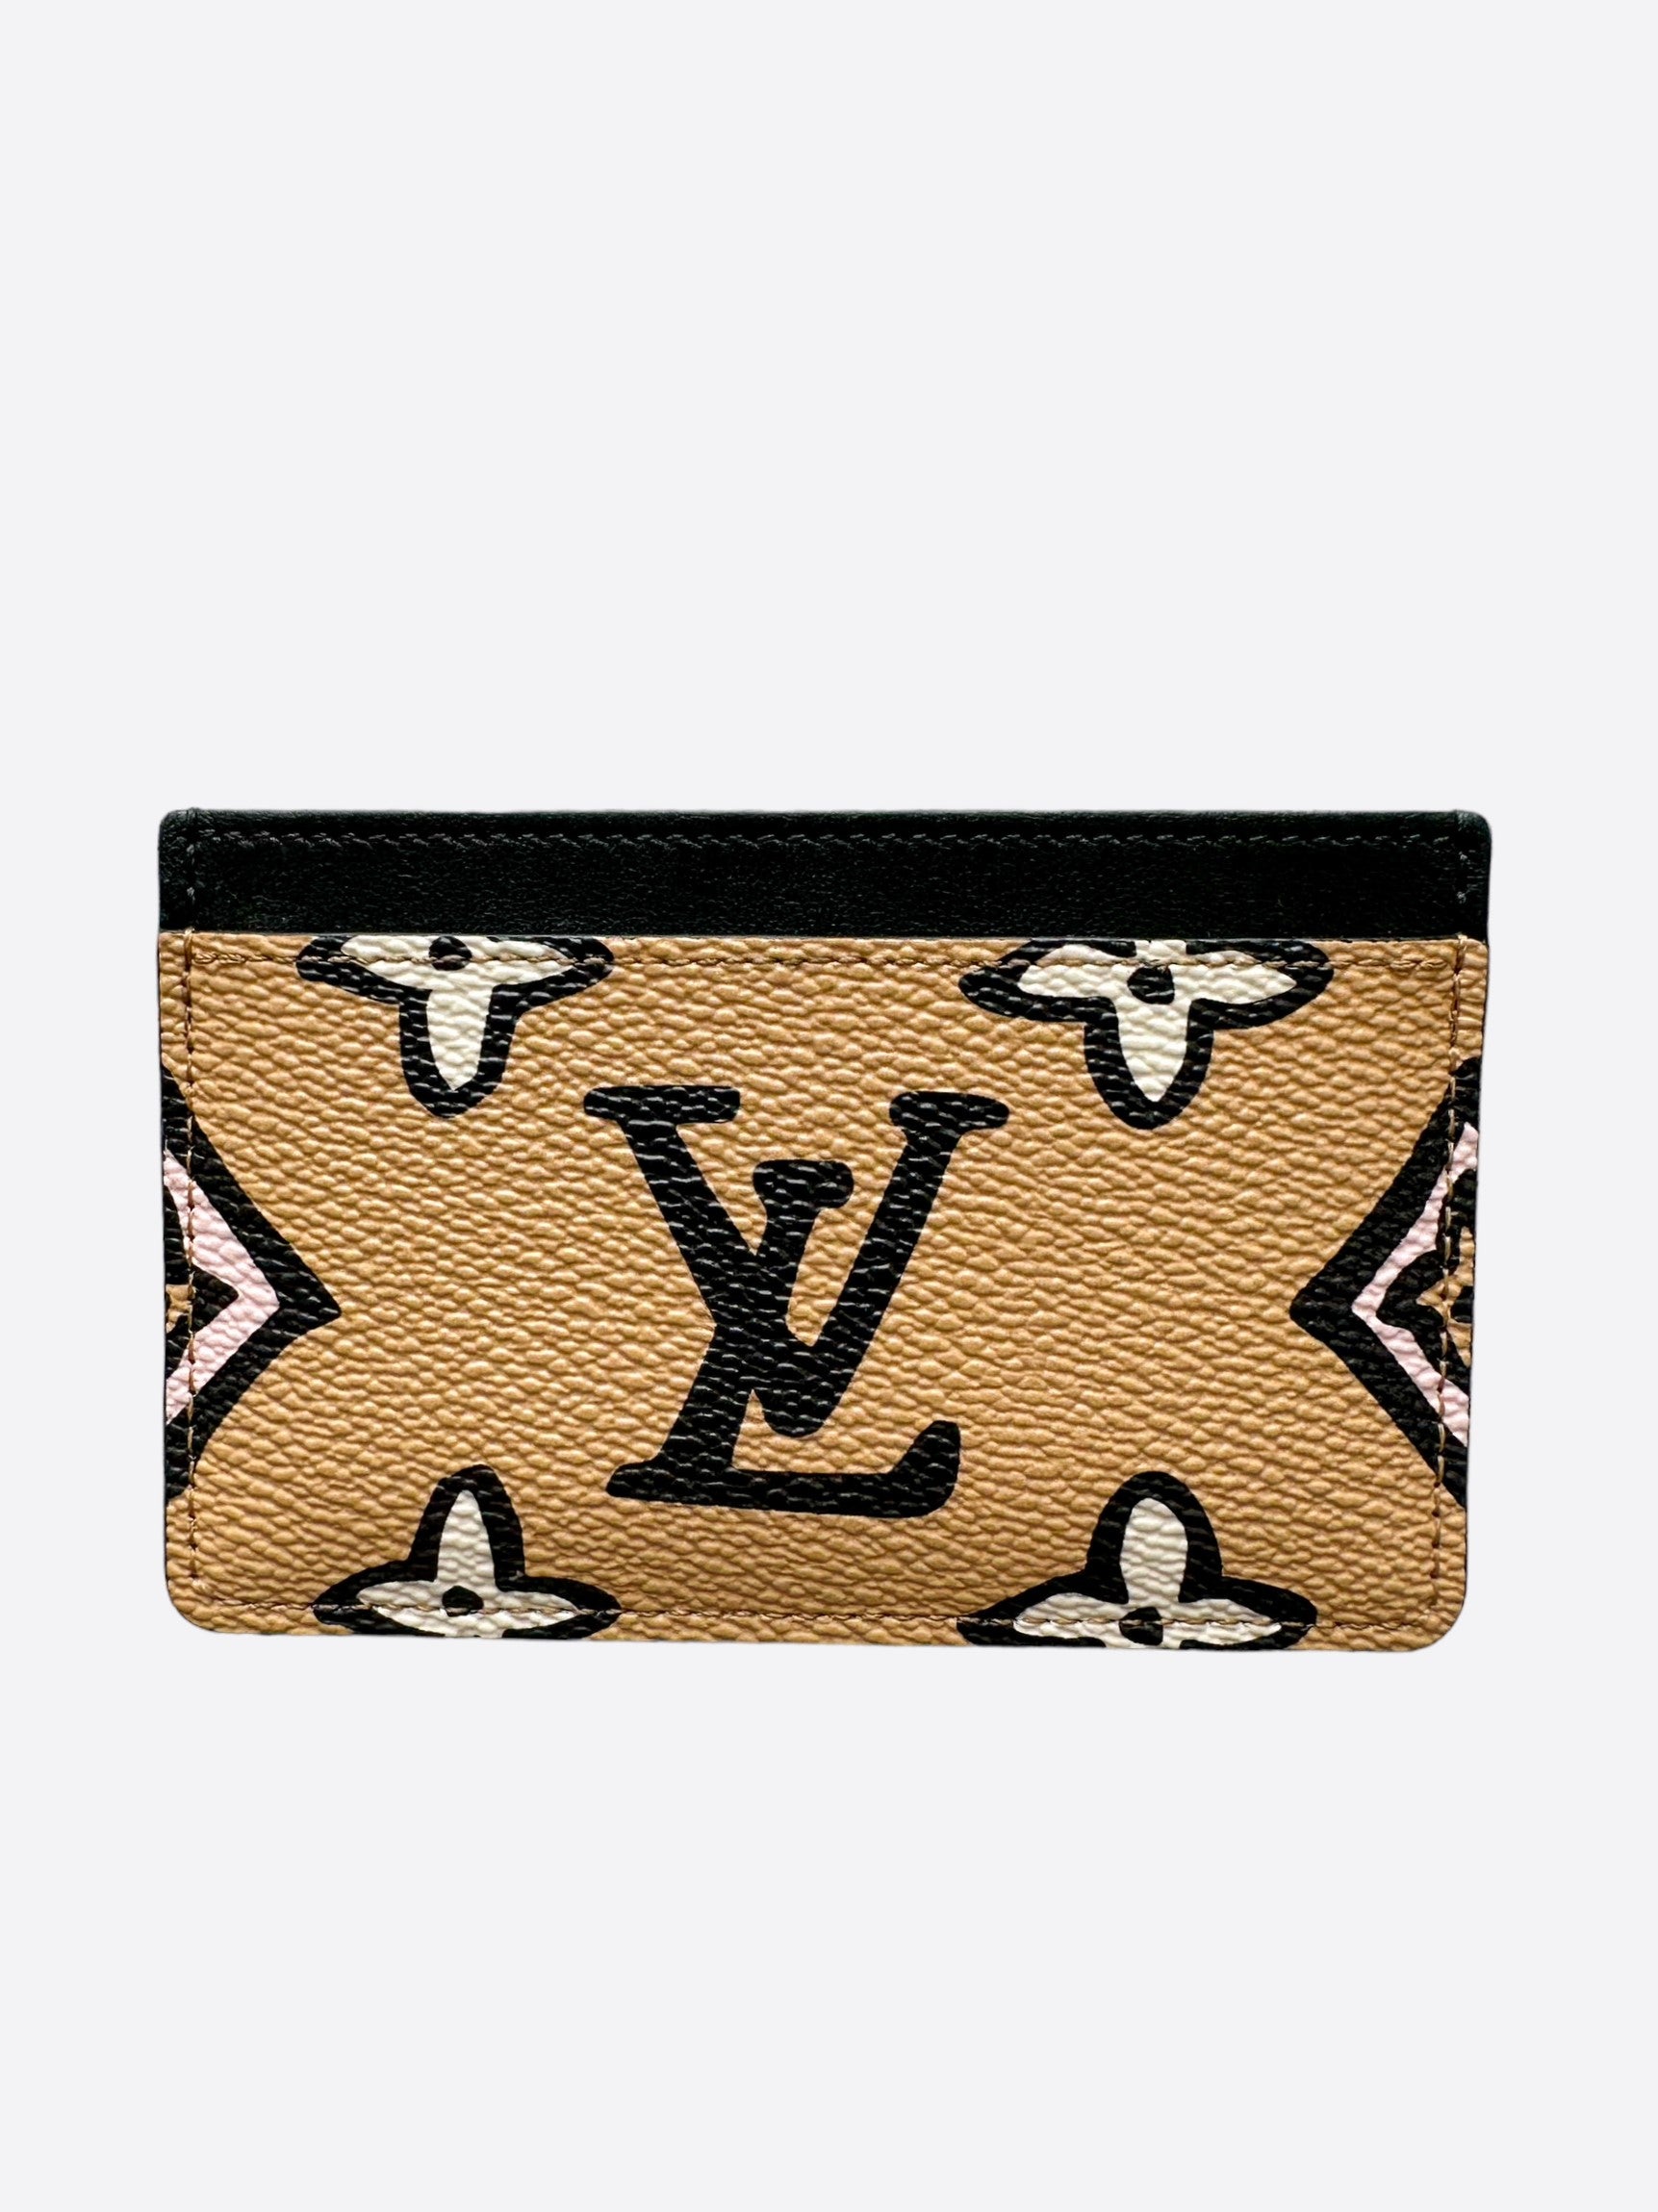 Louis Vuitton Case -  Australia